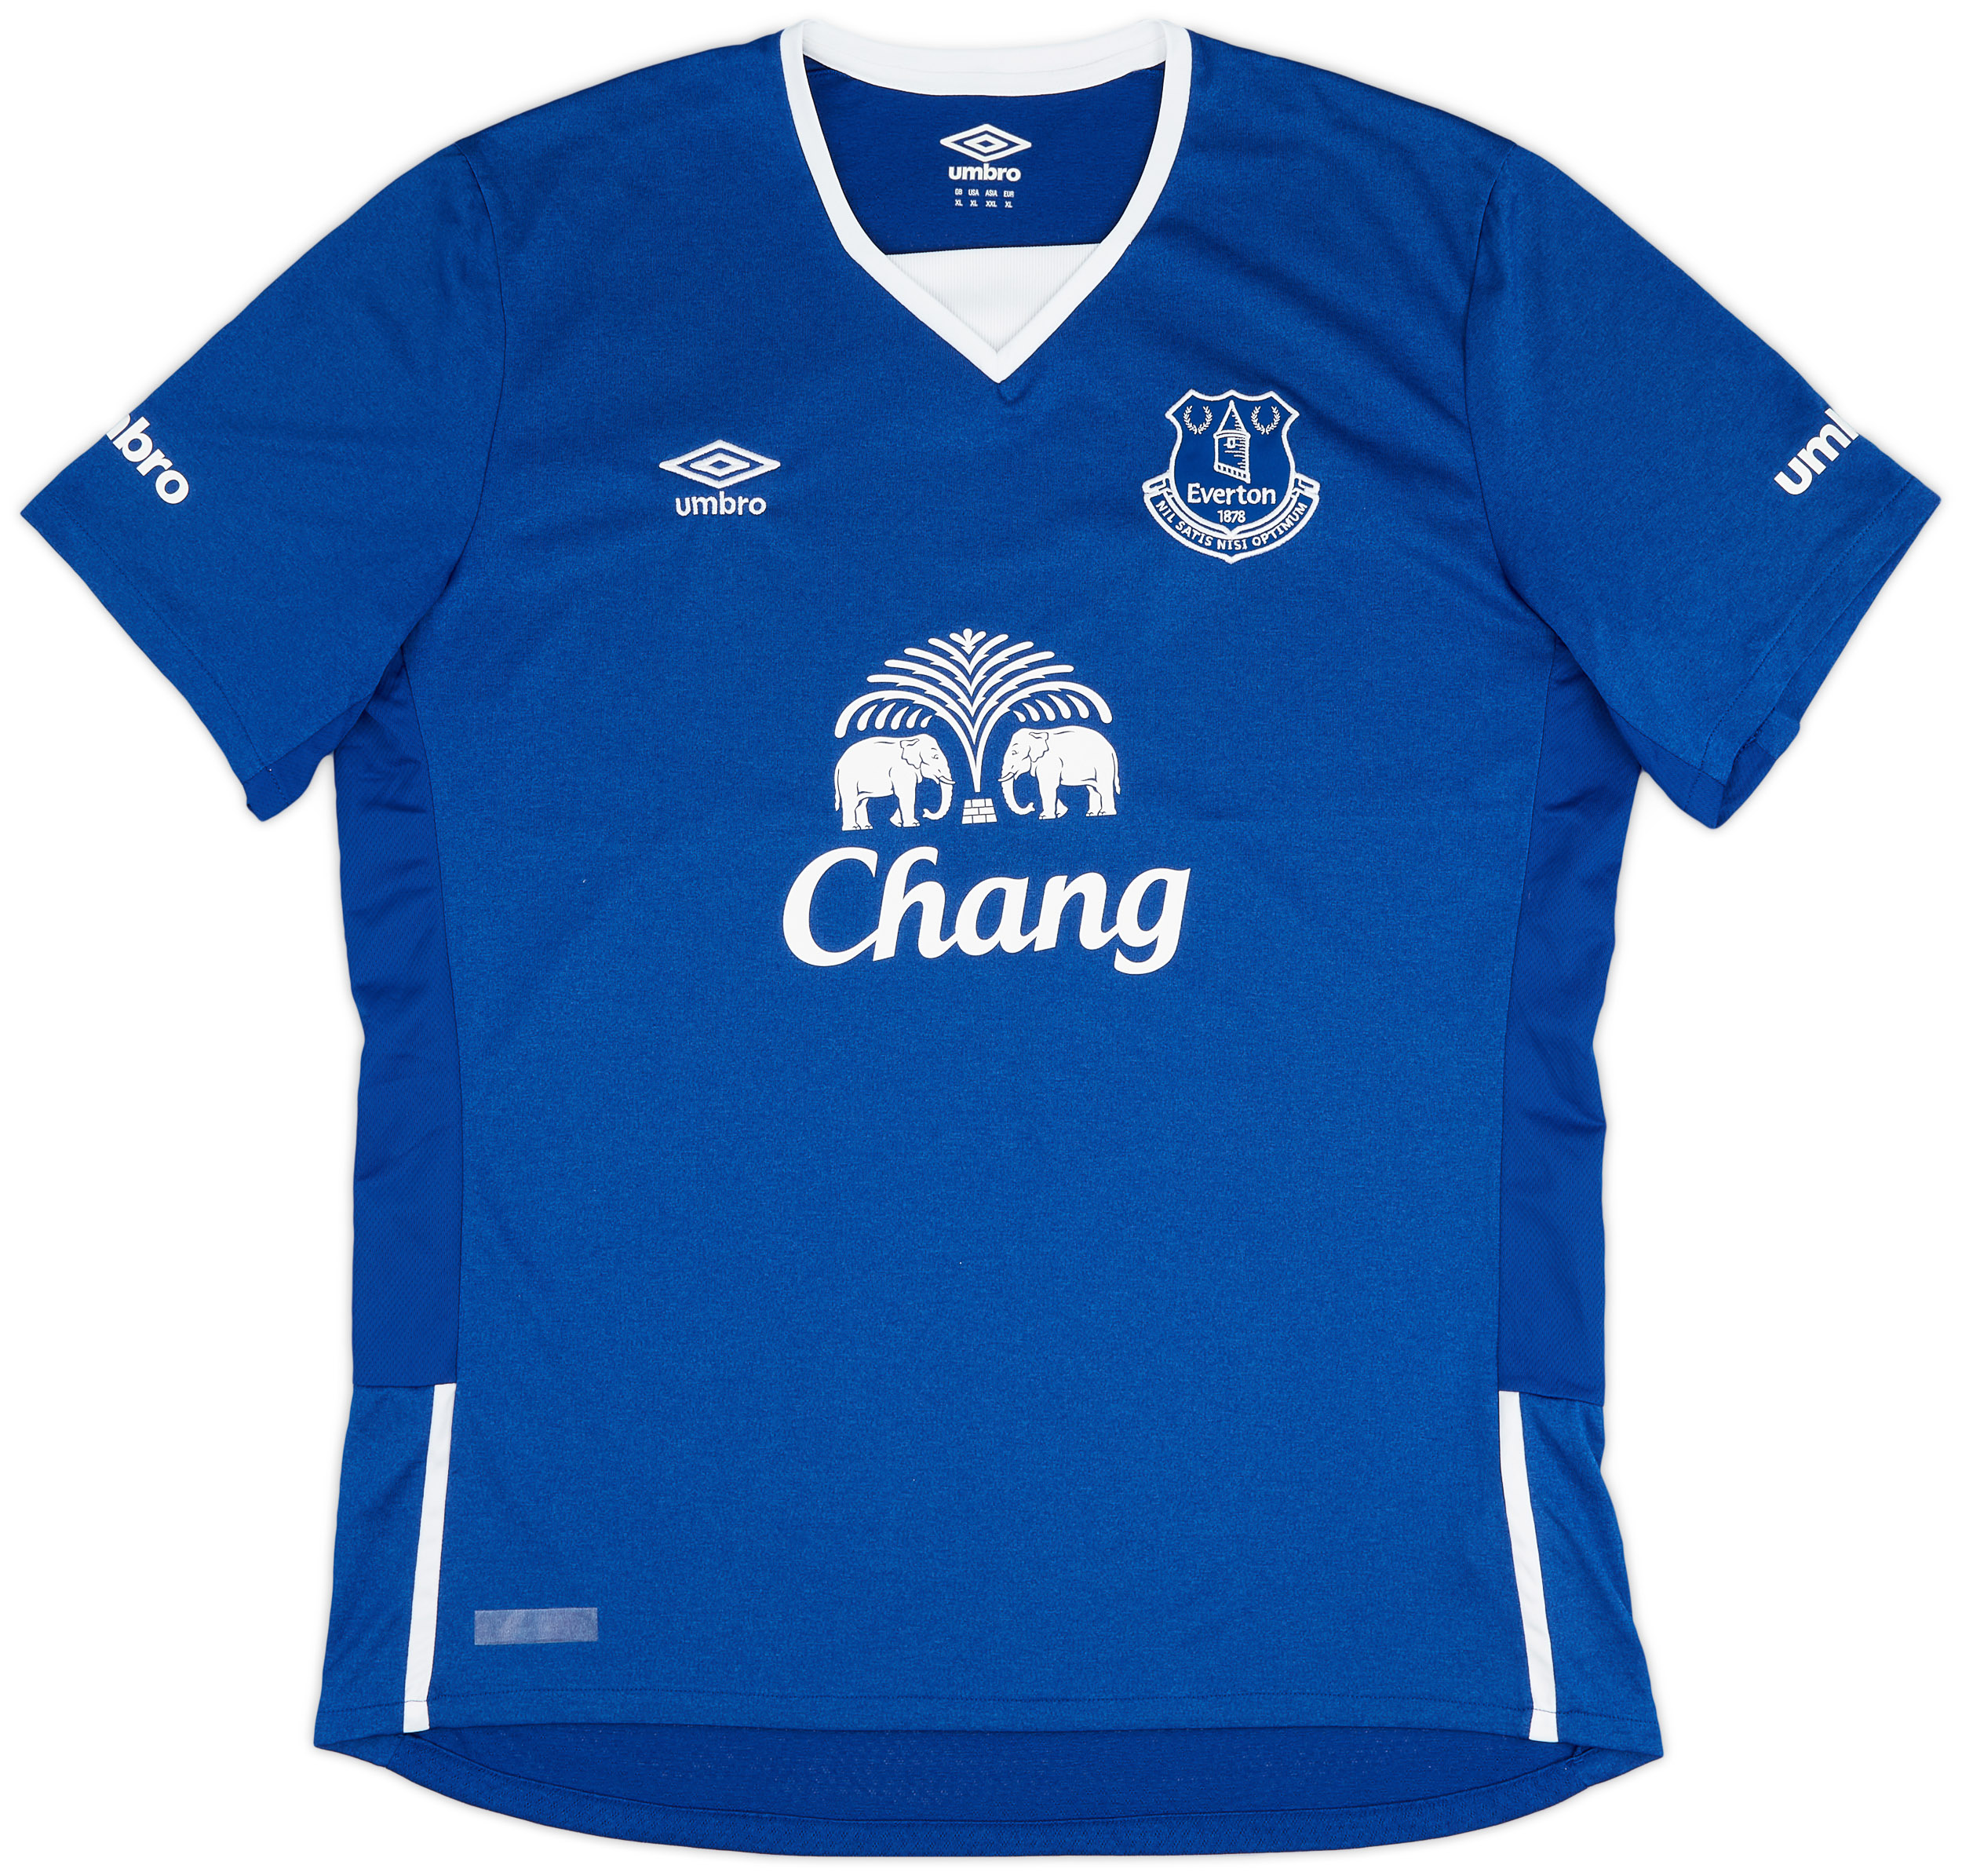 2015-16 Everton Home Shirt - 9/10 - ()